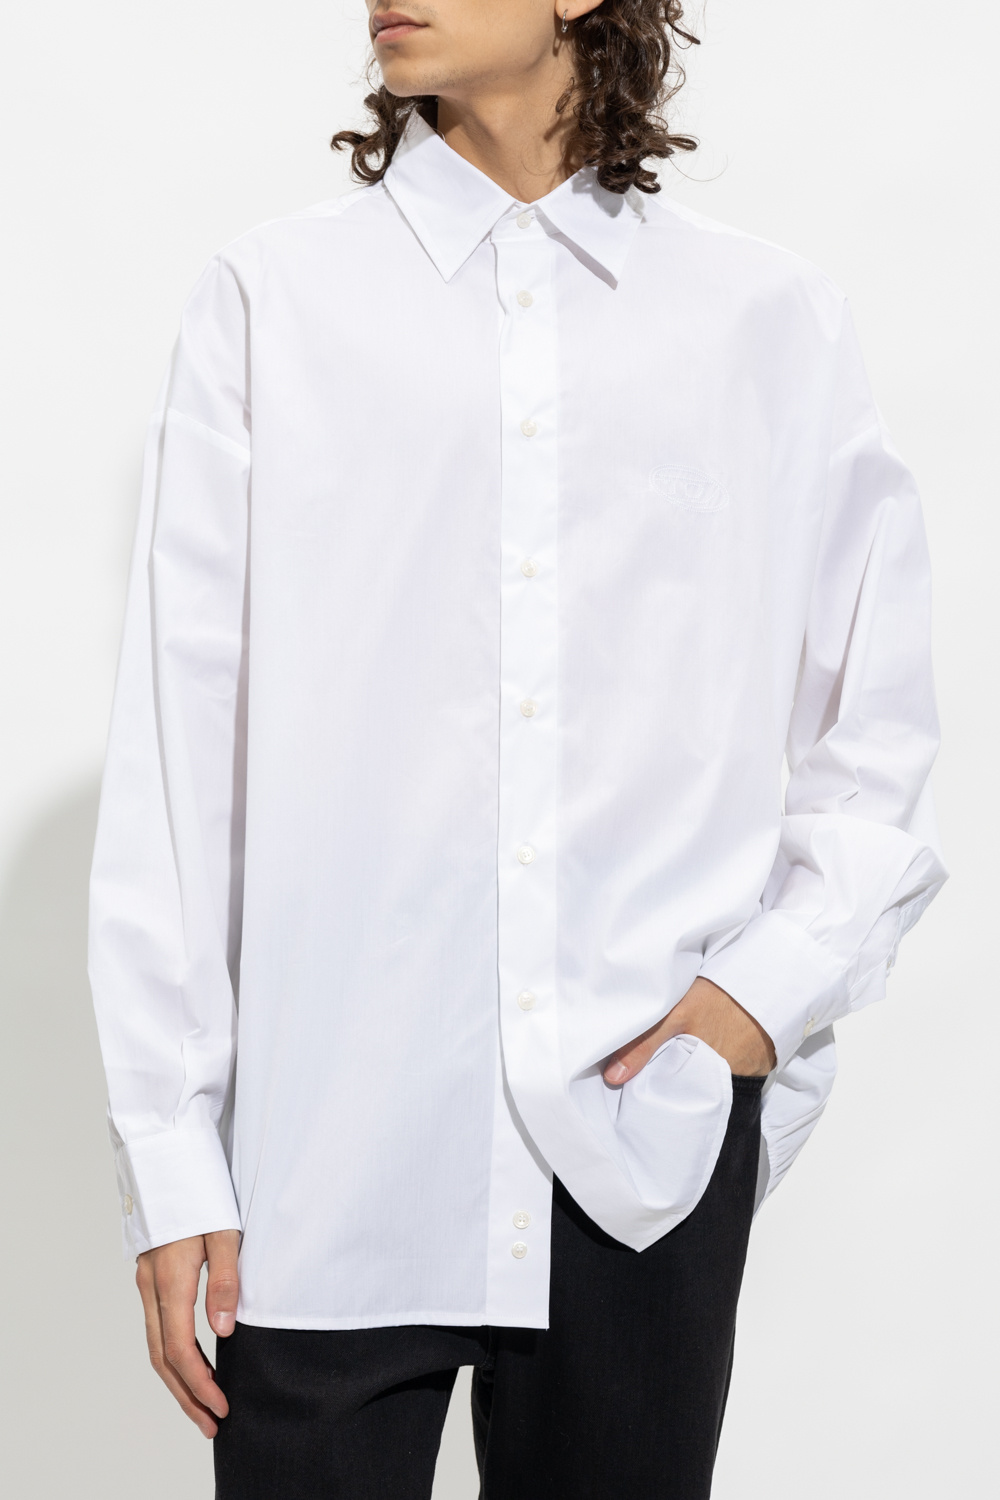 White 'S - CamaragrancanariaShops Guadeloupe - DOUBLY' shirt with